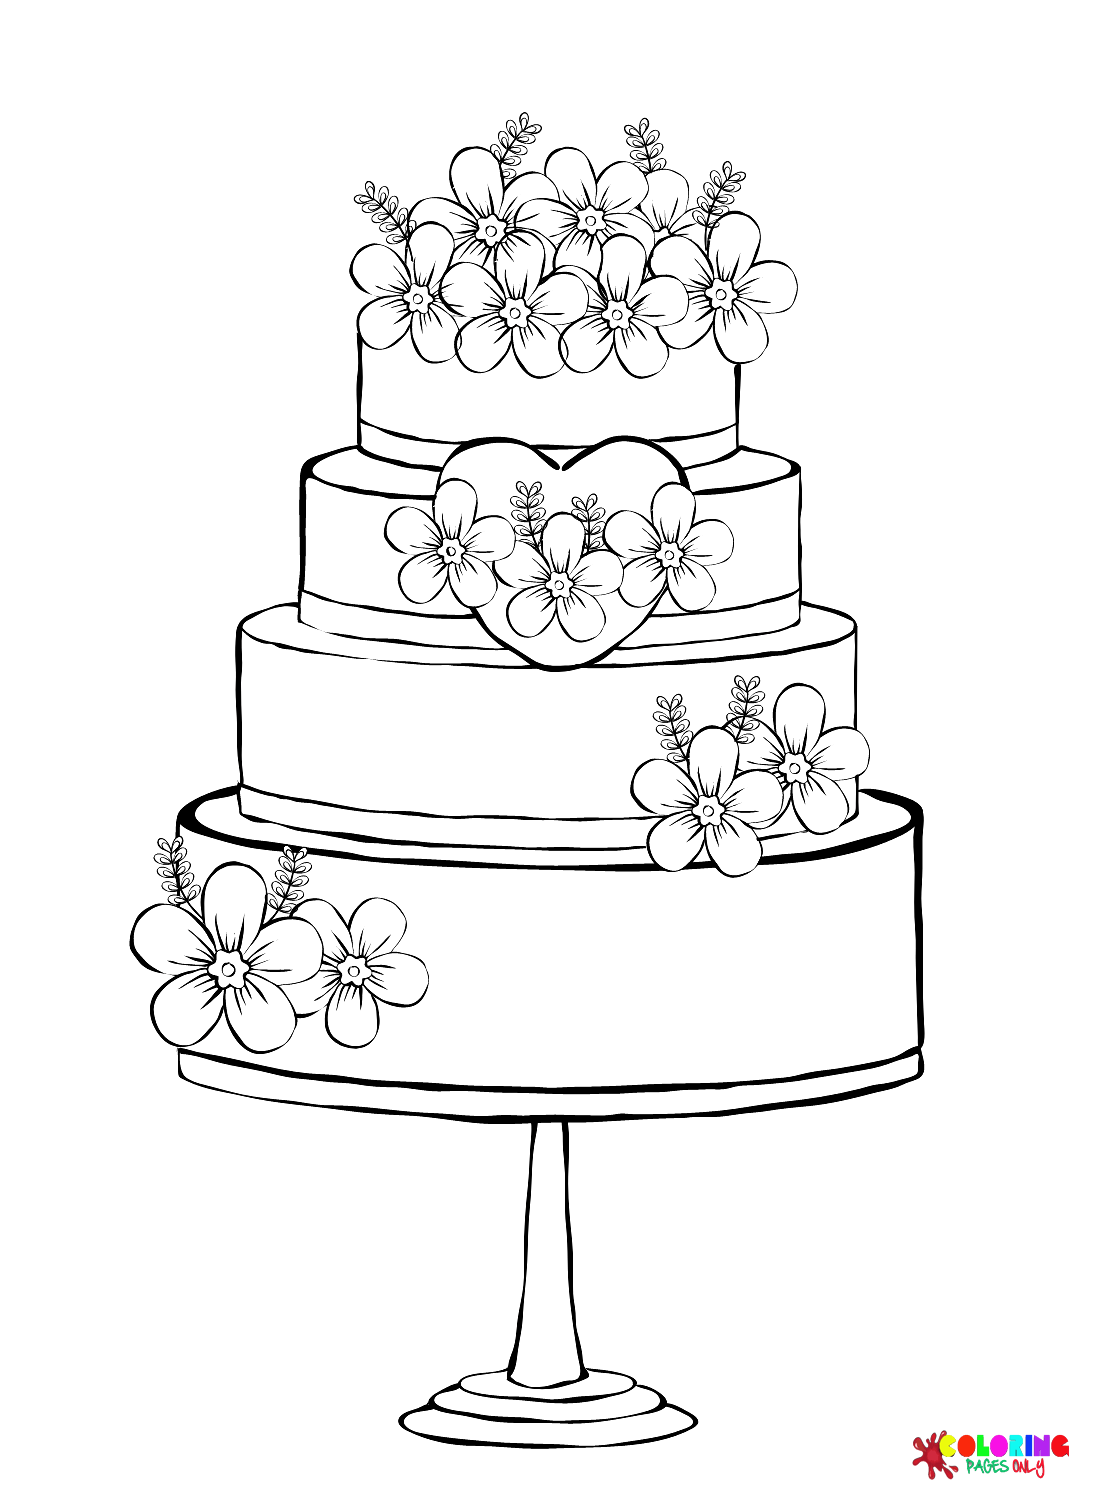 Sweet Wedding Cake with Flowers from Wedding Cake